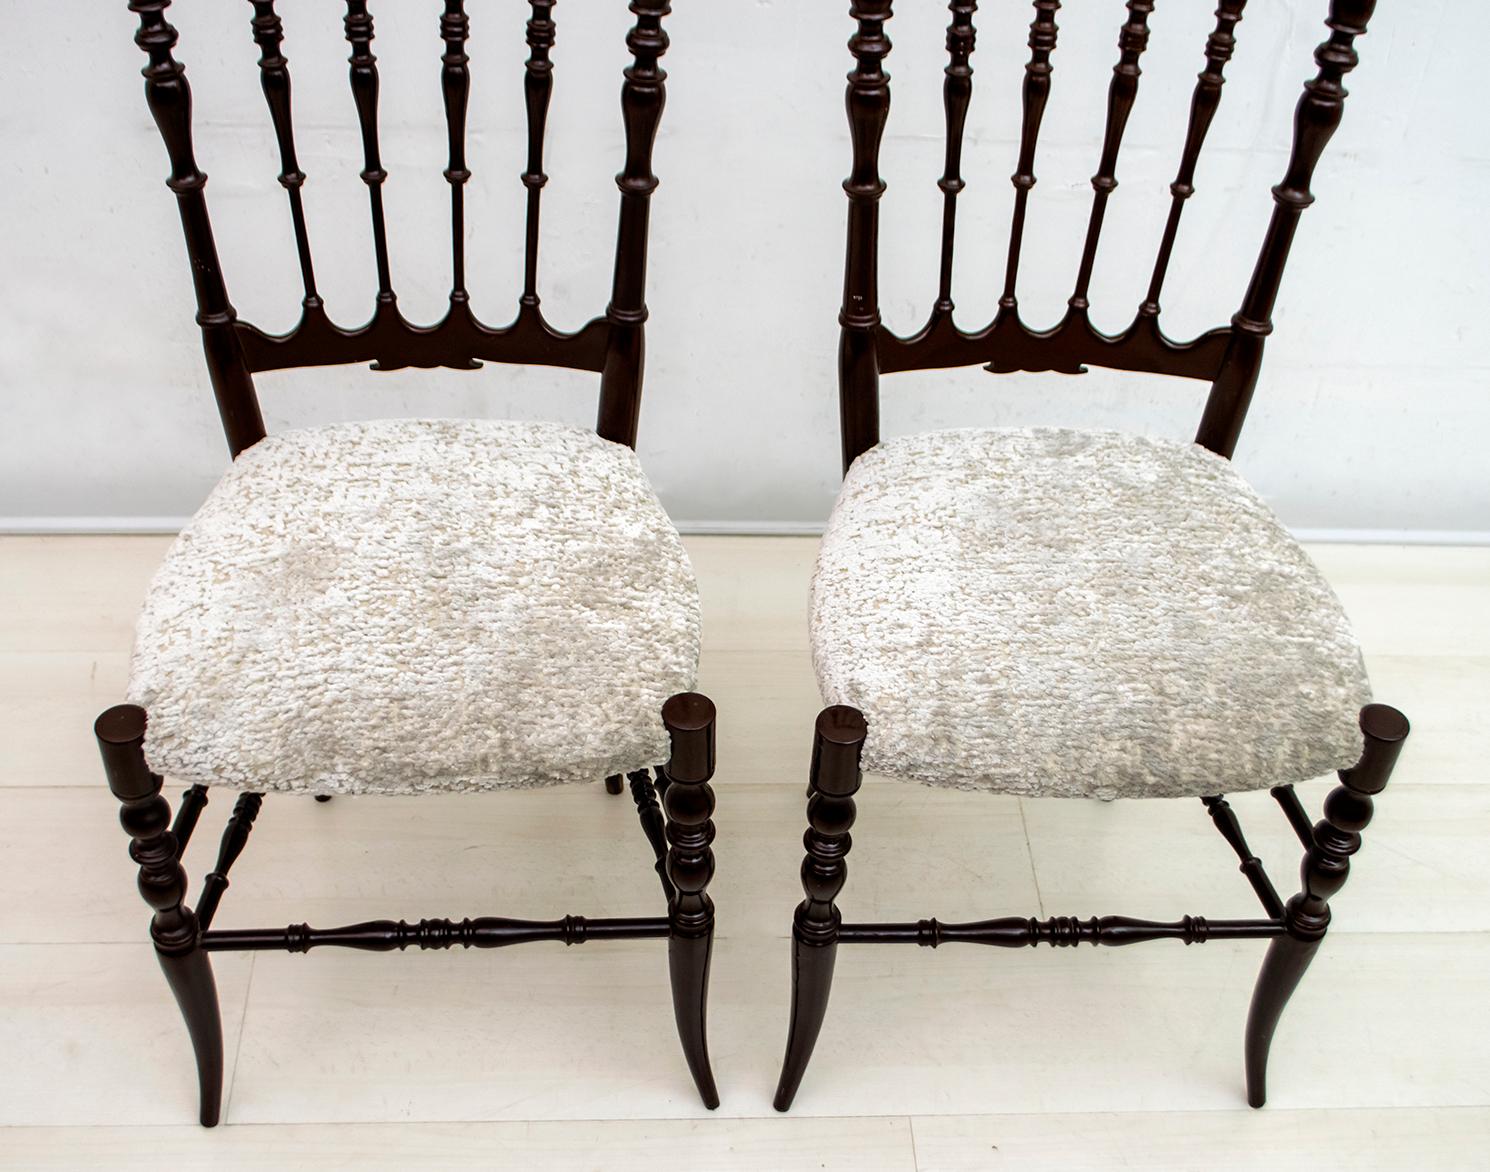 Pair of Gaetano Descalzi Midcentury Italian Chiavari High Back Chairs, 1950s For Sale 1